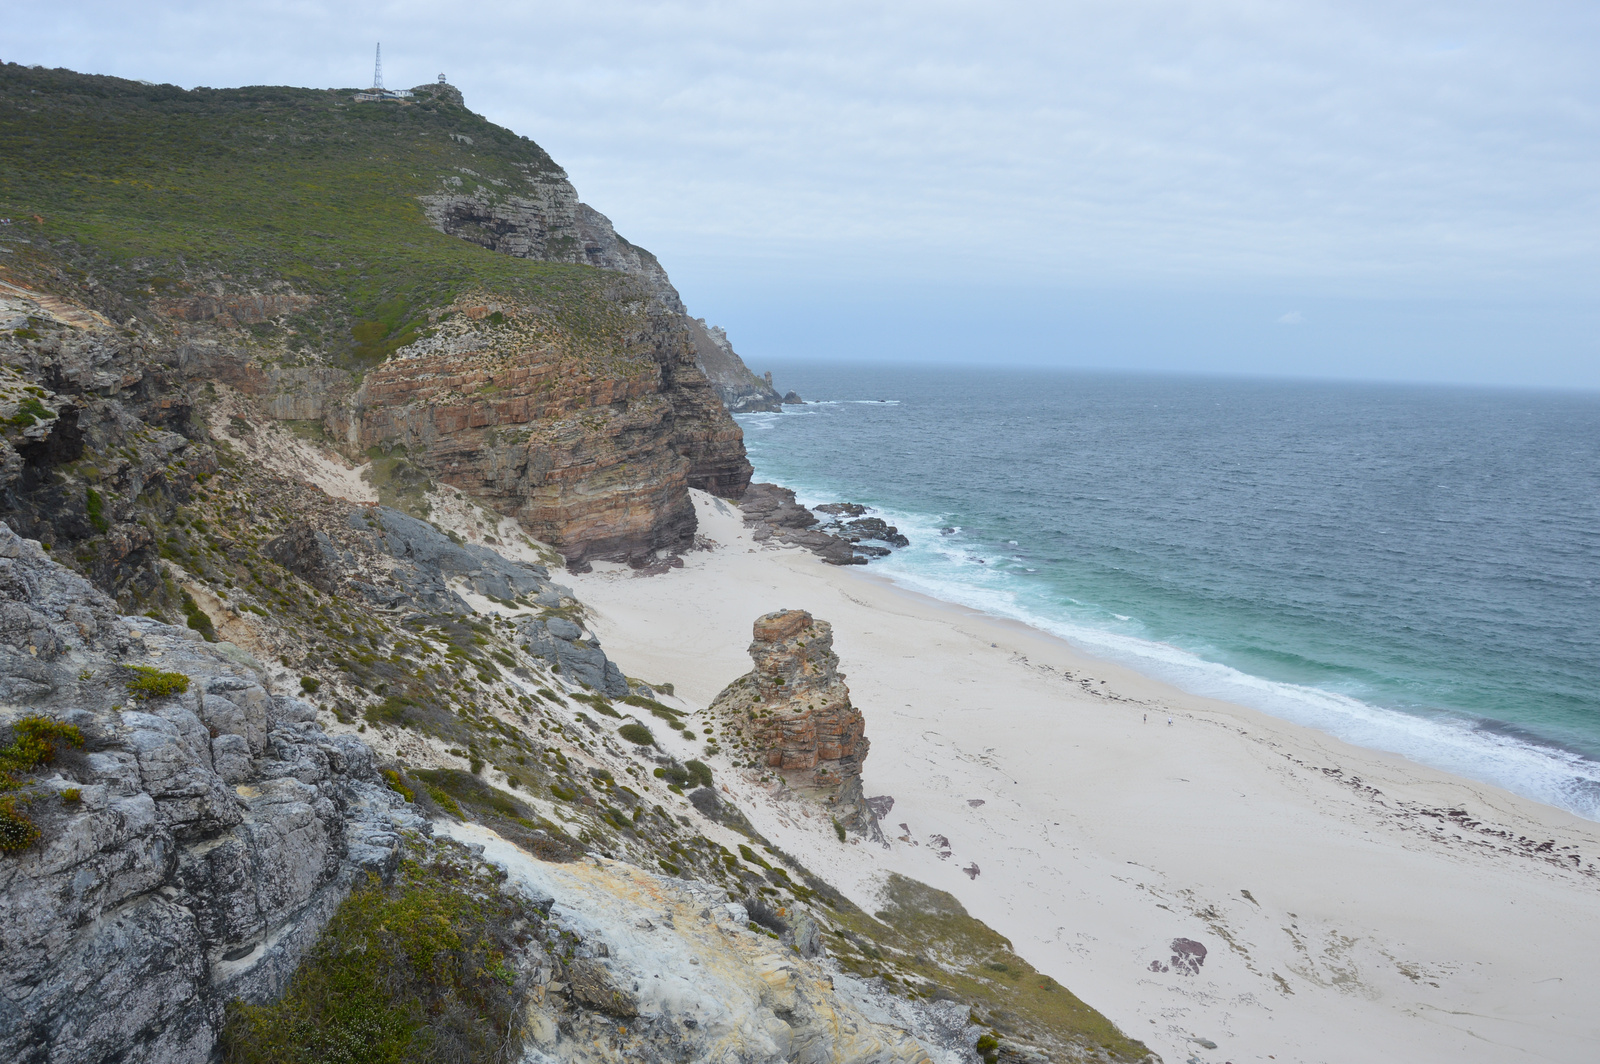 Joremenyseg-foka Strand es hatterben a Cape Point